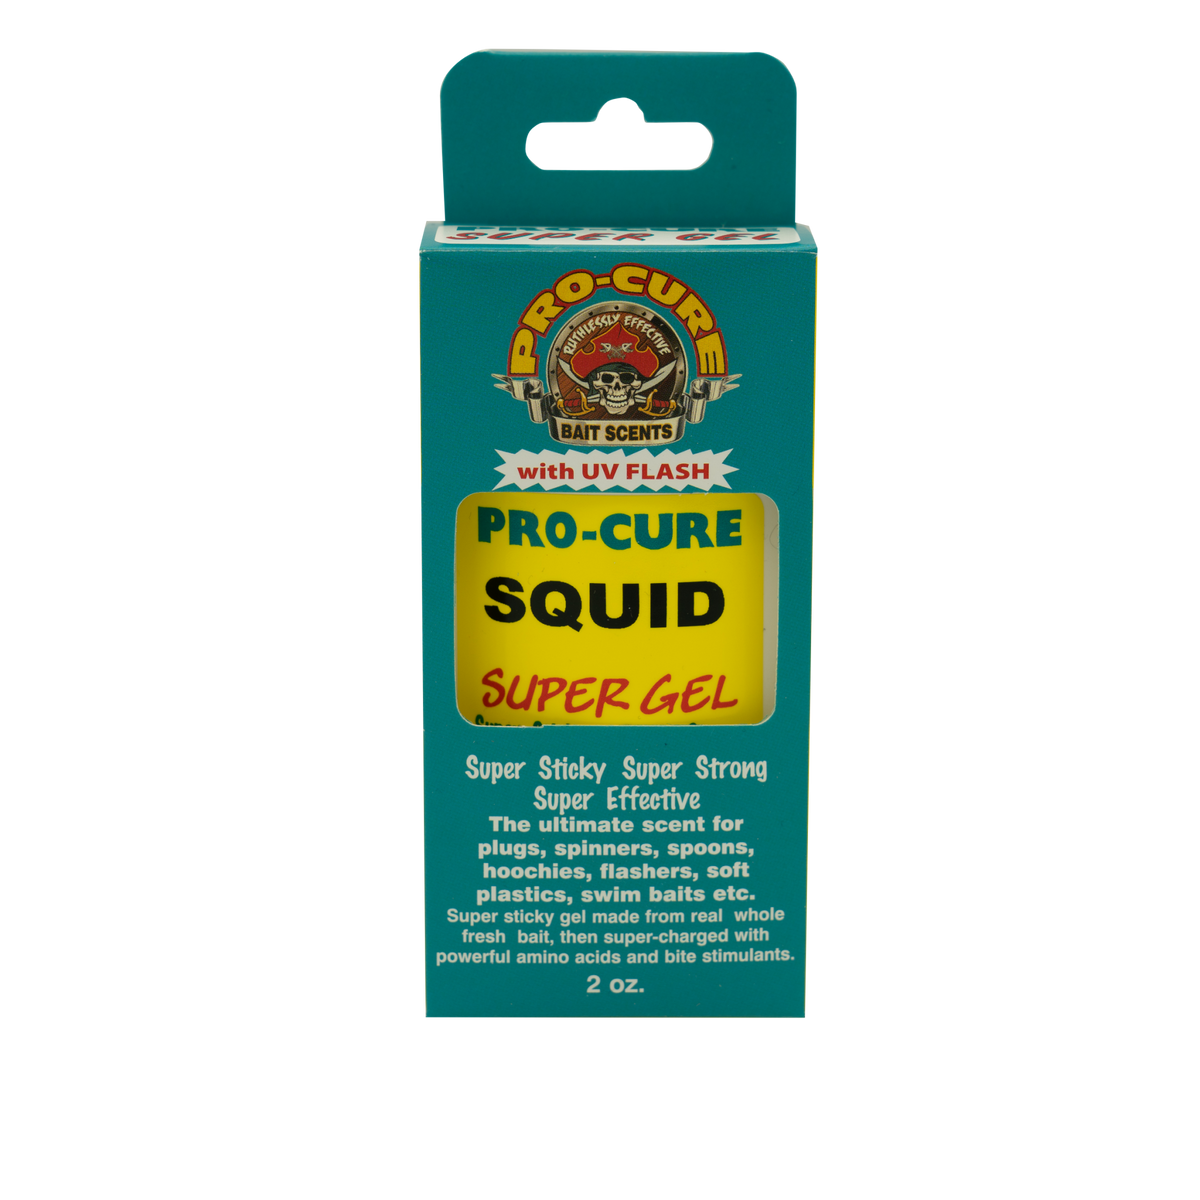 SQUID SUPER GEL – Pro-Cure, Inc